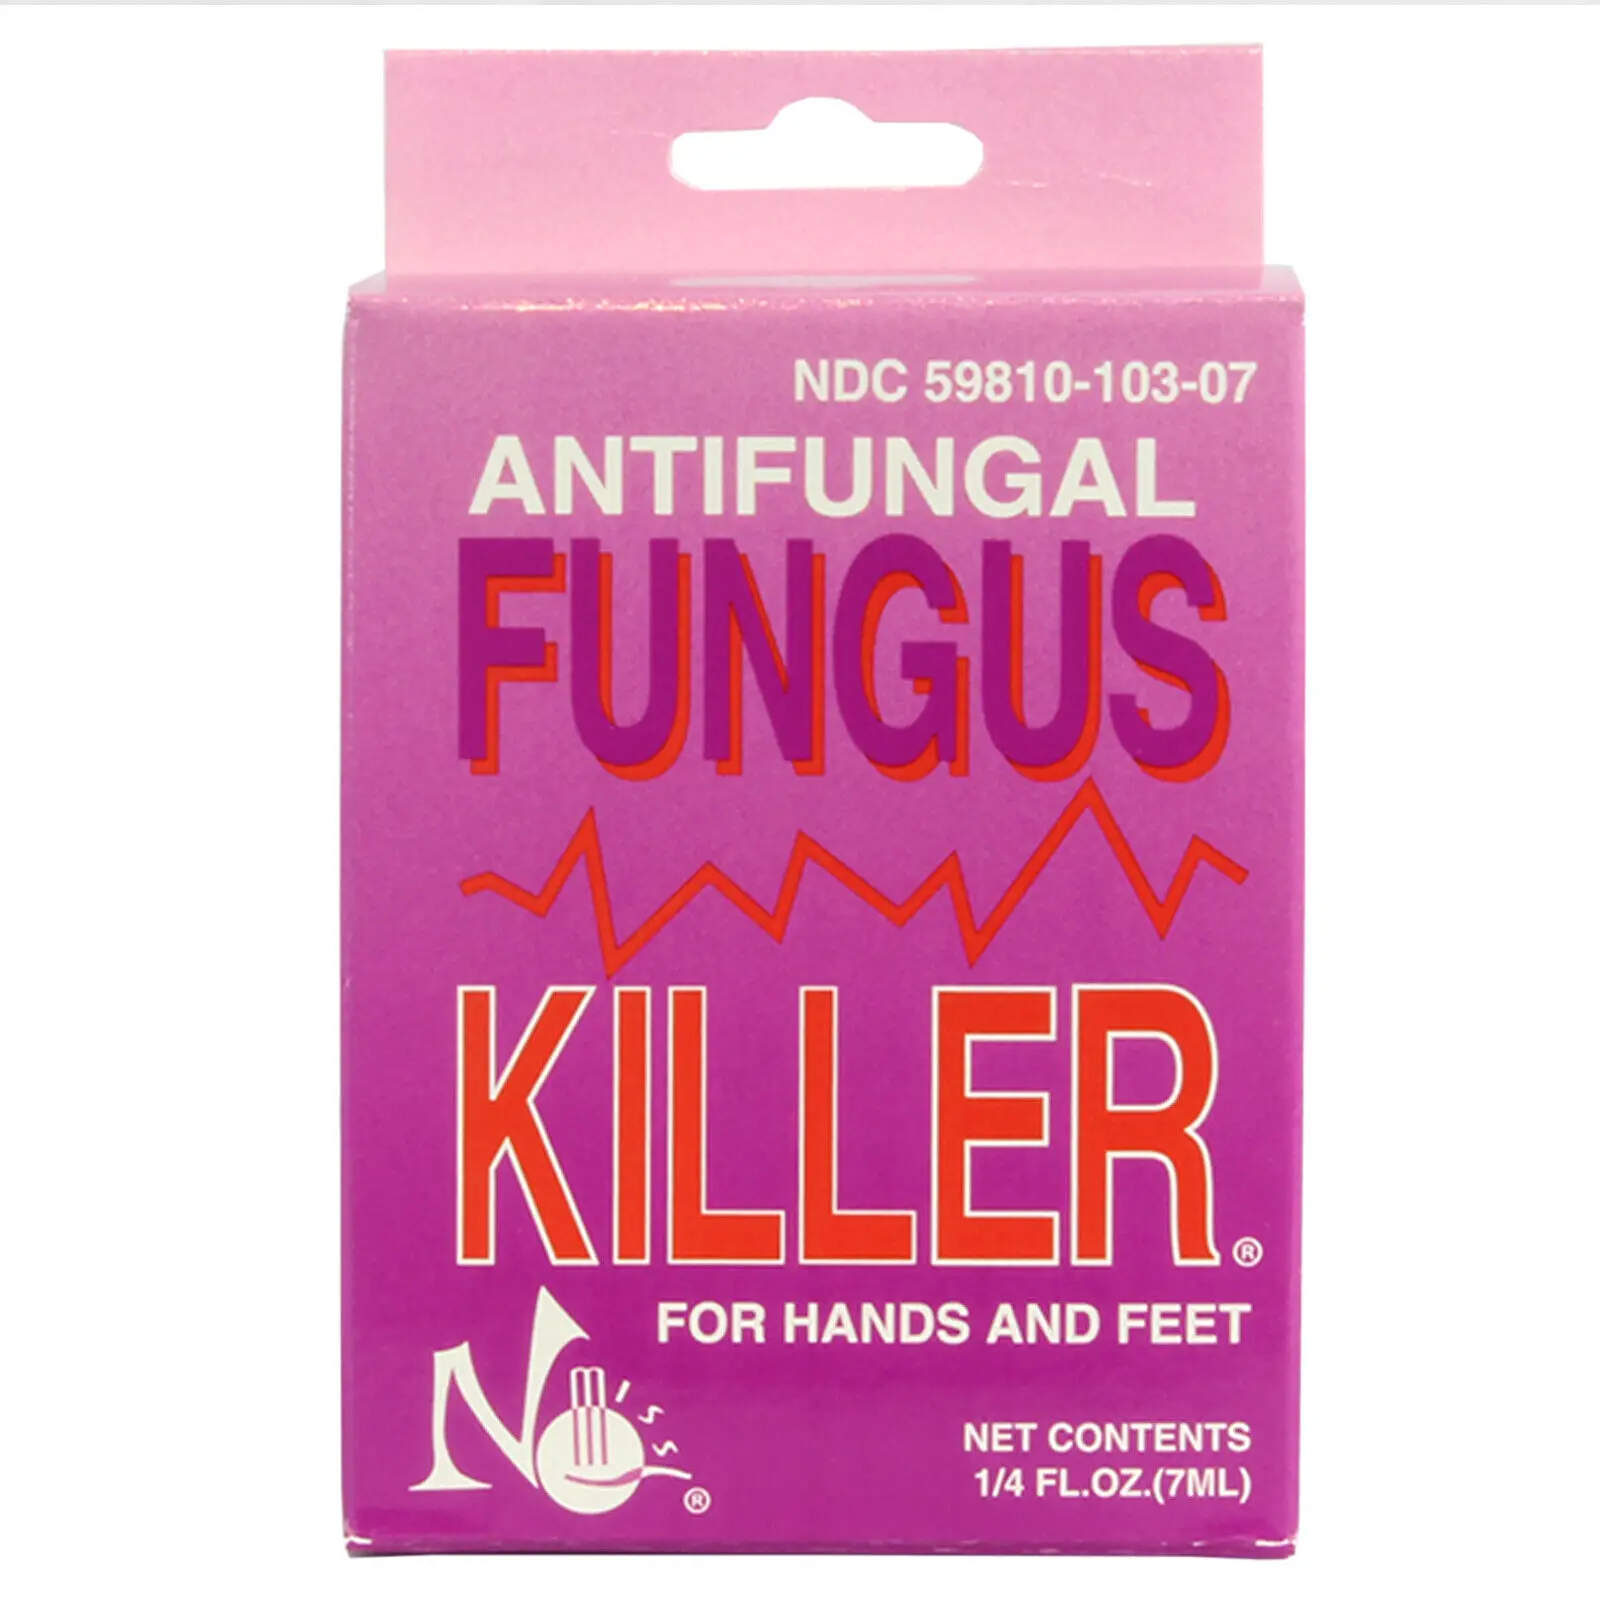  No Miss Antifungal Fungus Killer for hands and feet 1/4 fl.oz. 7ml ...